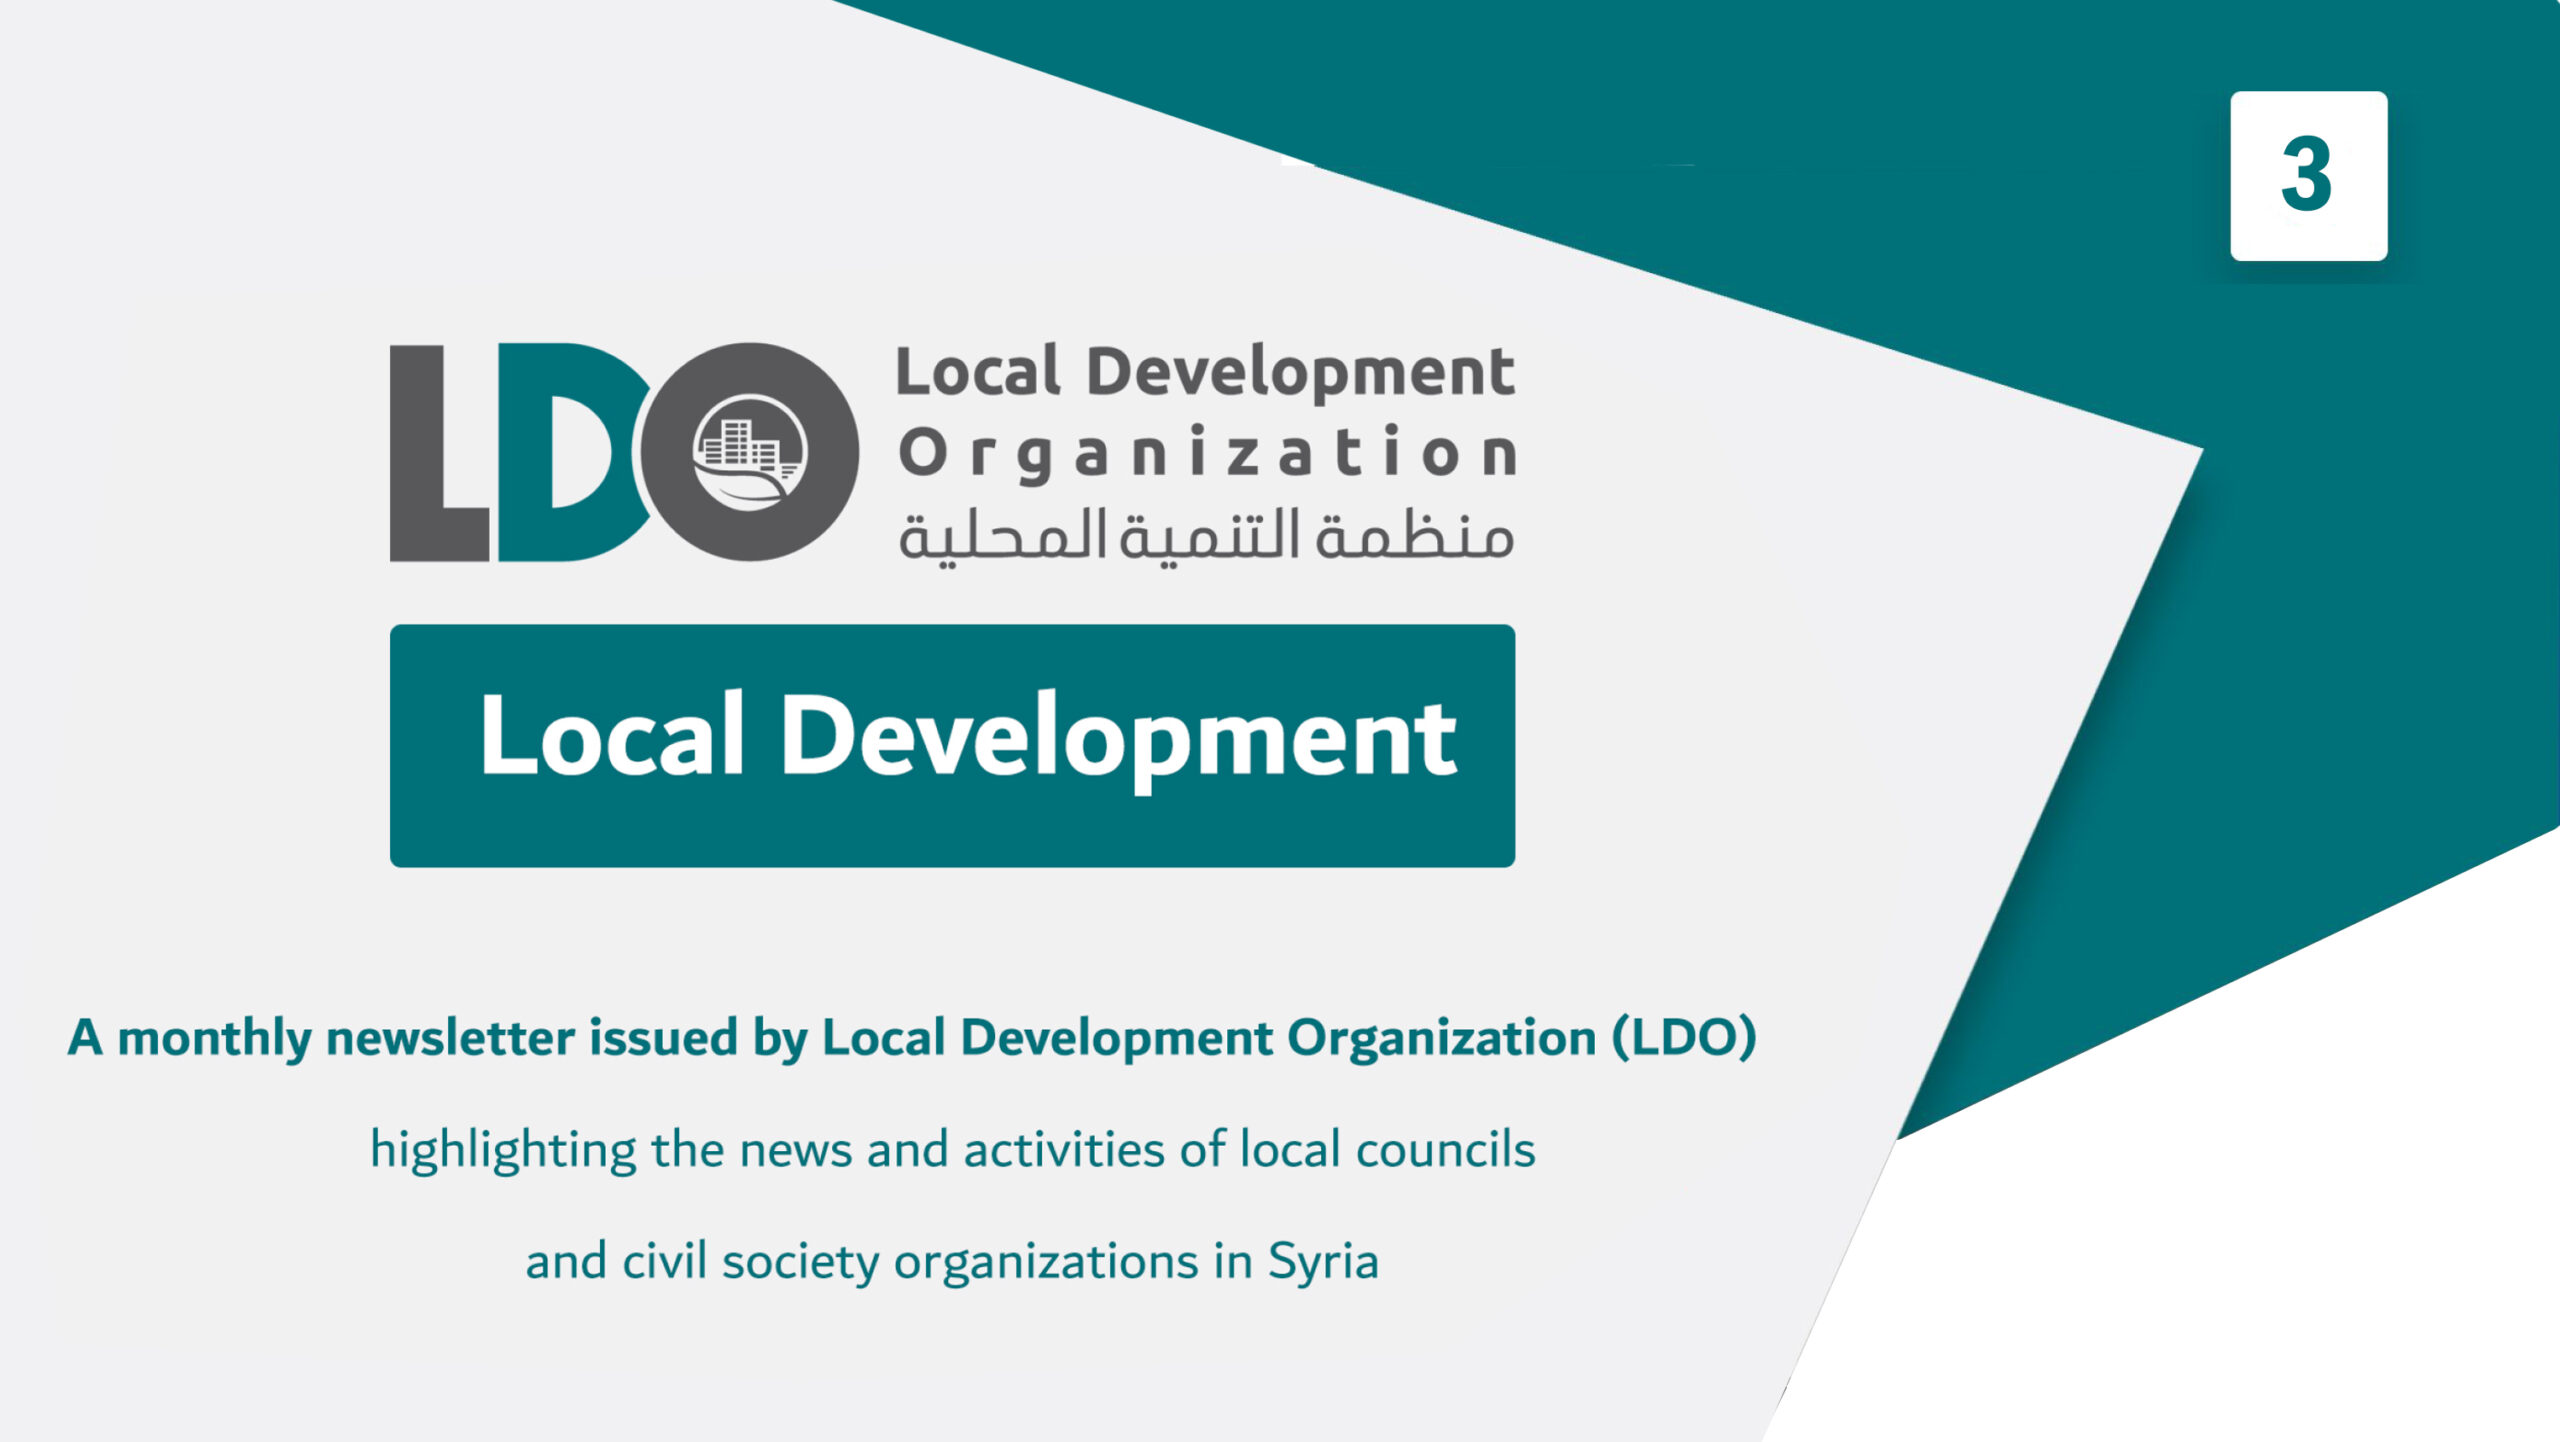 The third issue - Local Development